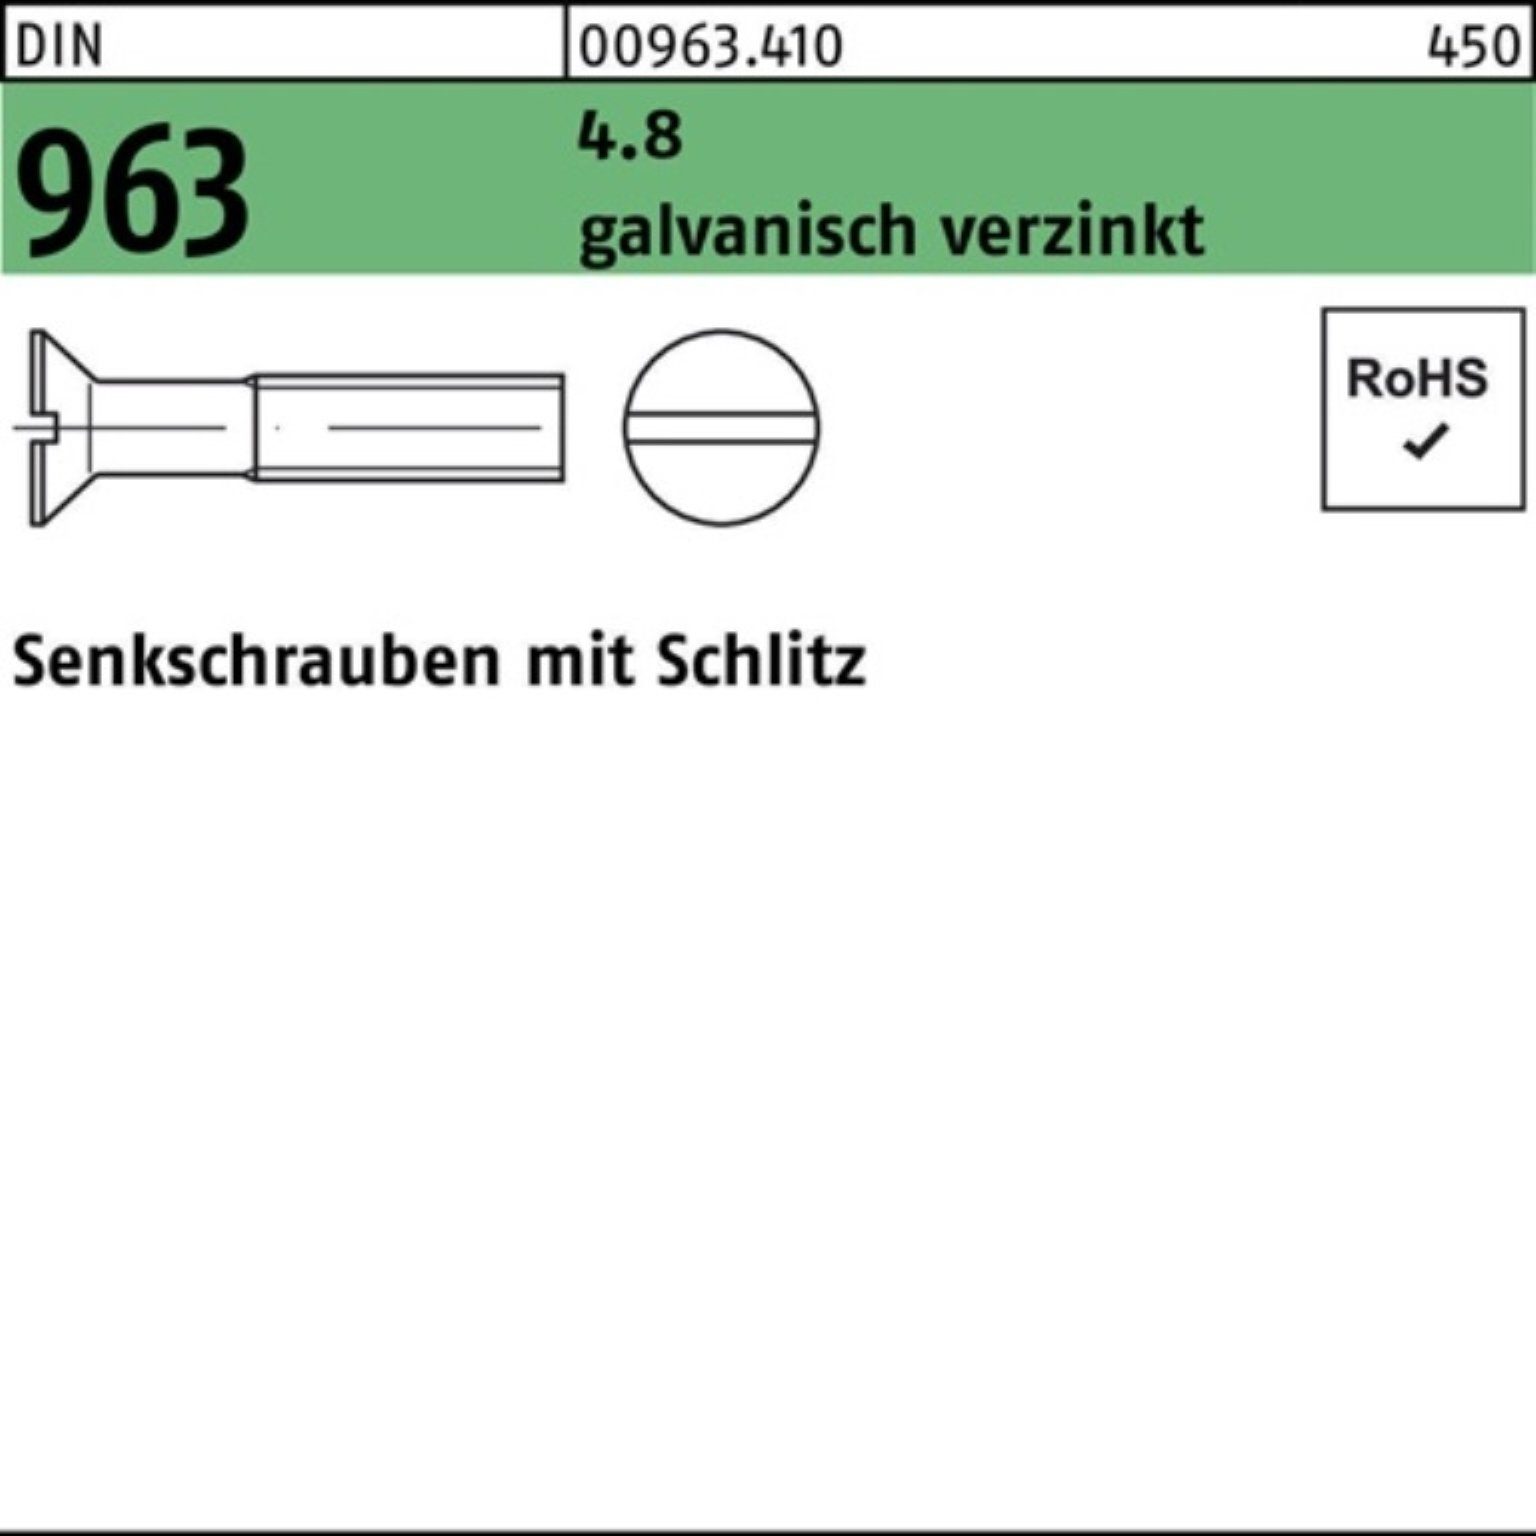 Senkschraube M5x Stü 100er 80 Reyher Senkschraube DIN 4.8 963 galv.verz. Schlitz 100 Pack